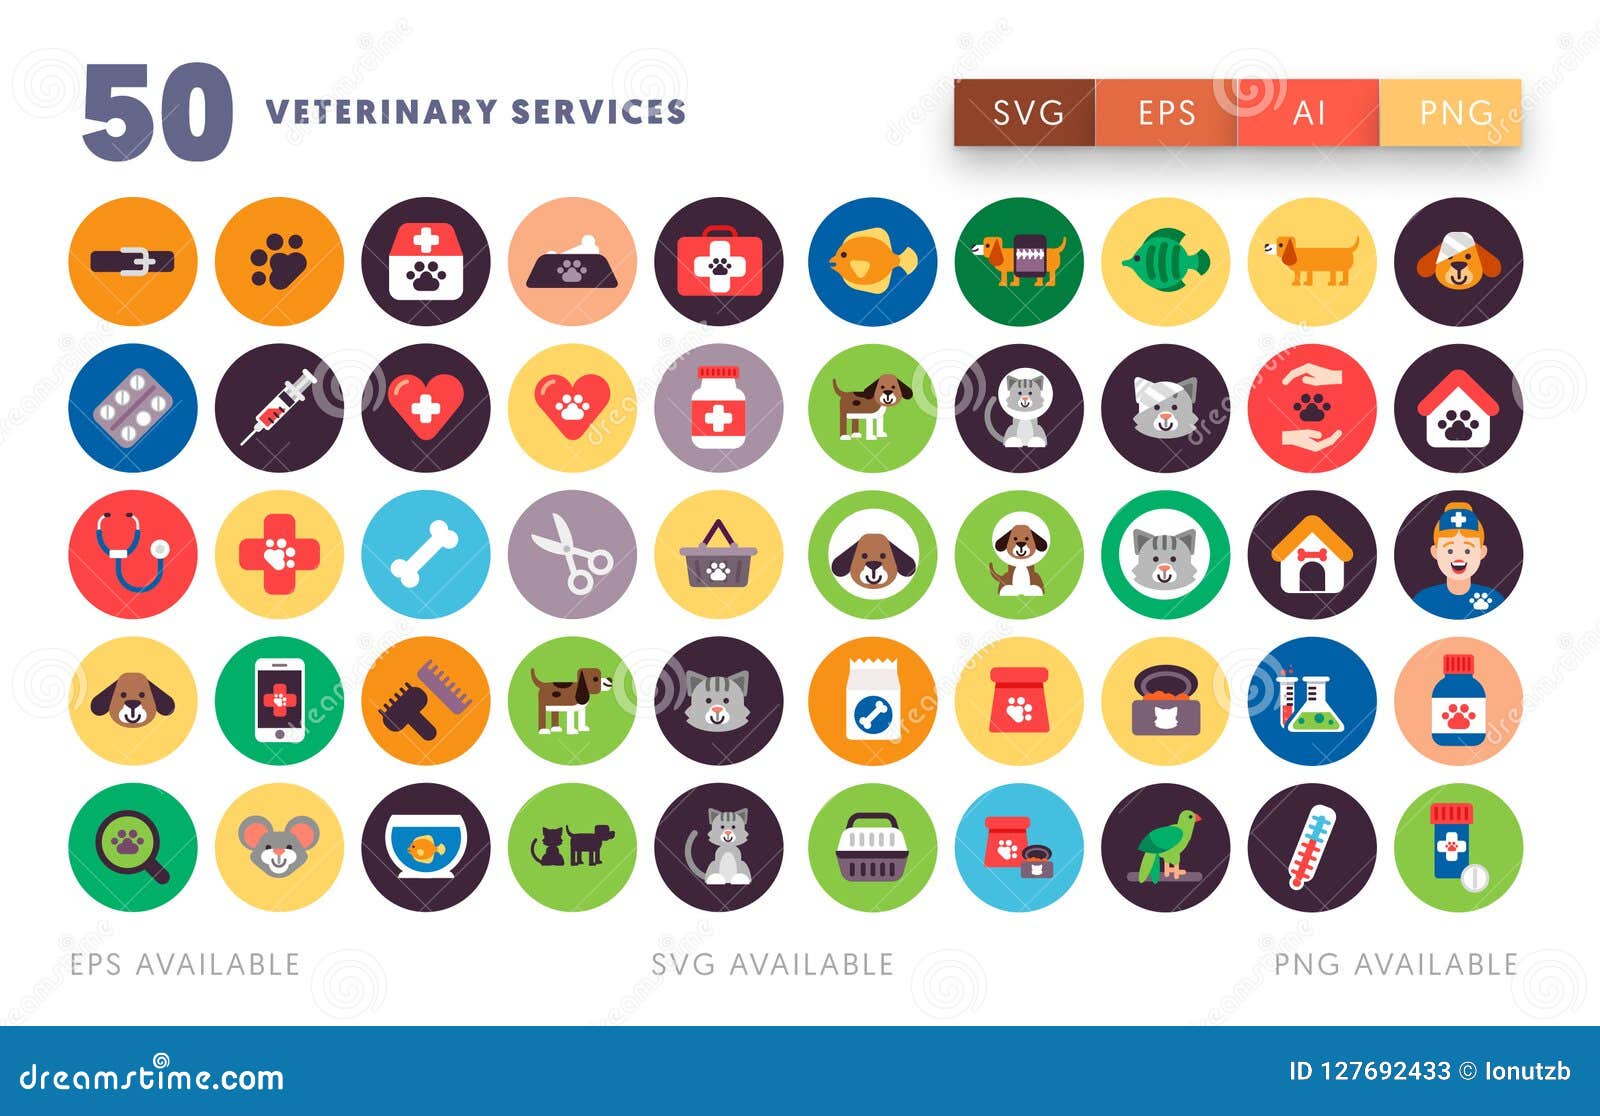 50 veterinary icons